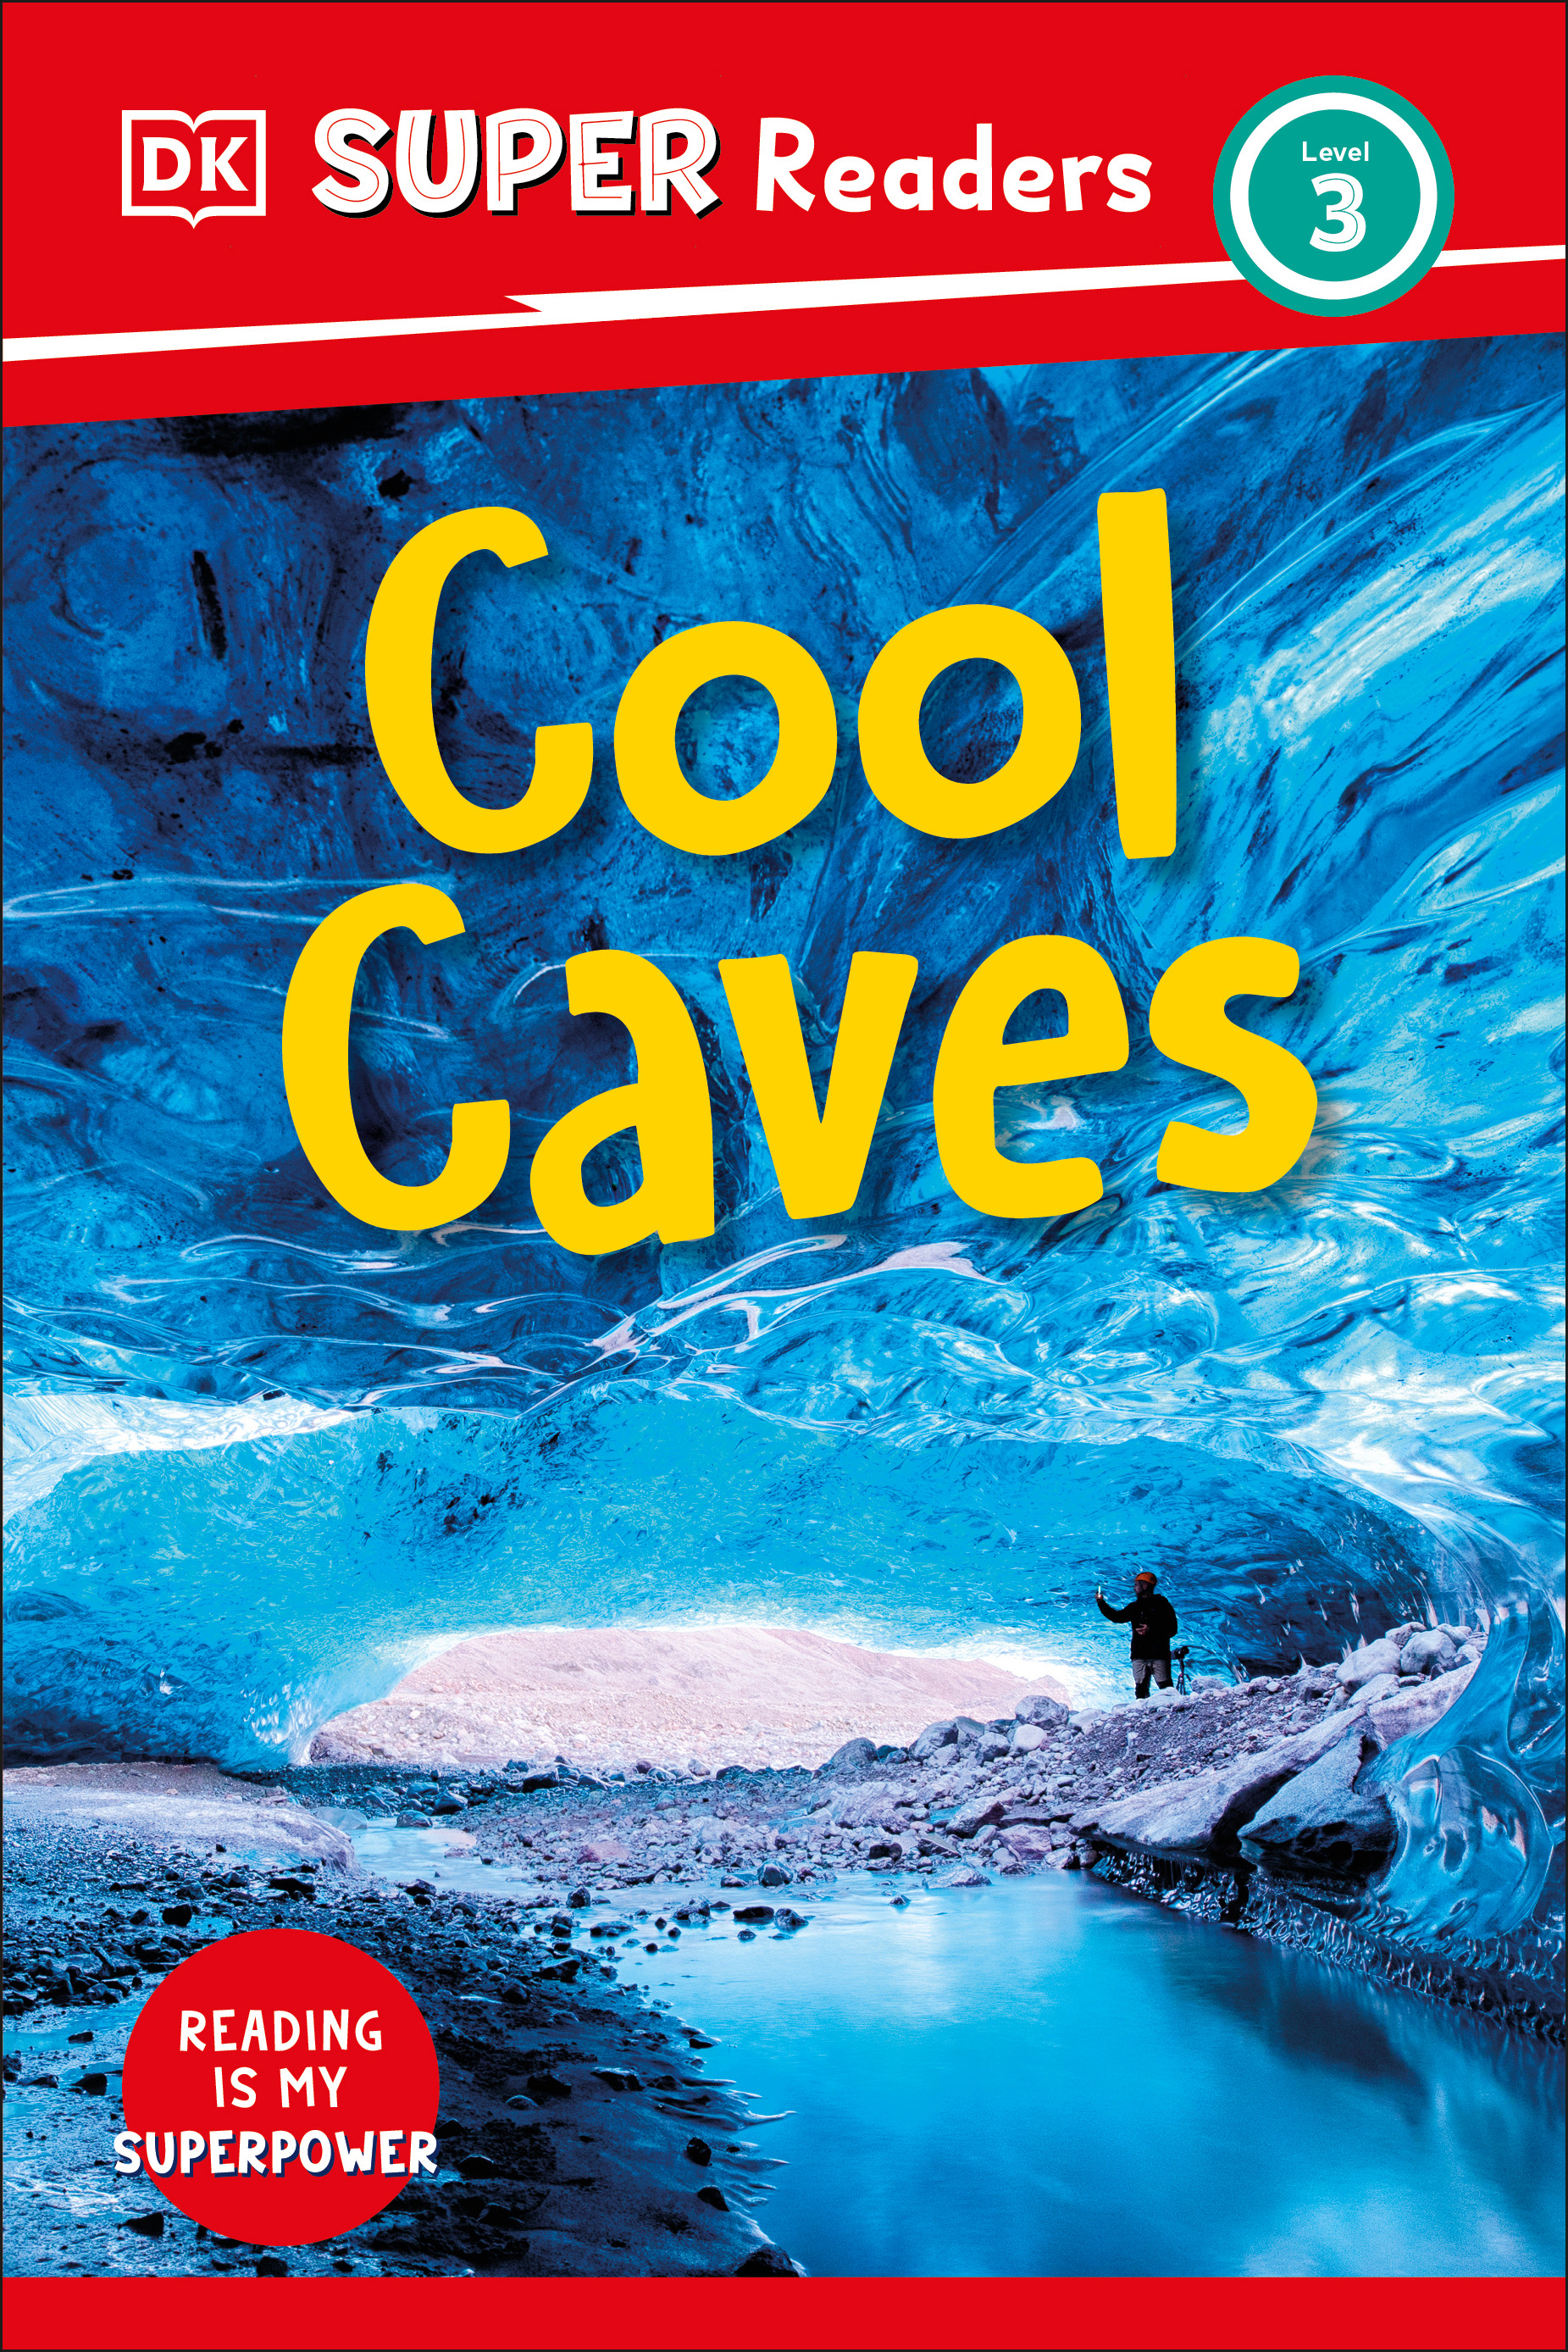 DK Super Readers Level 3 Cool Caves | 